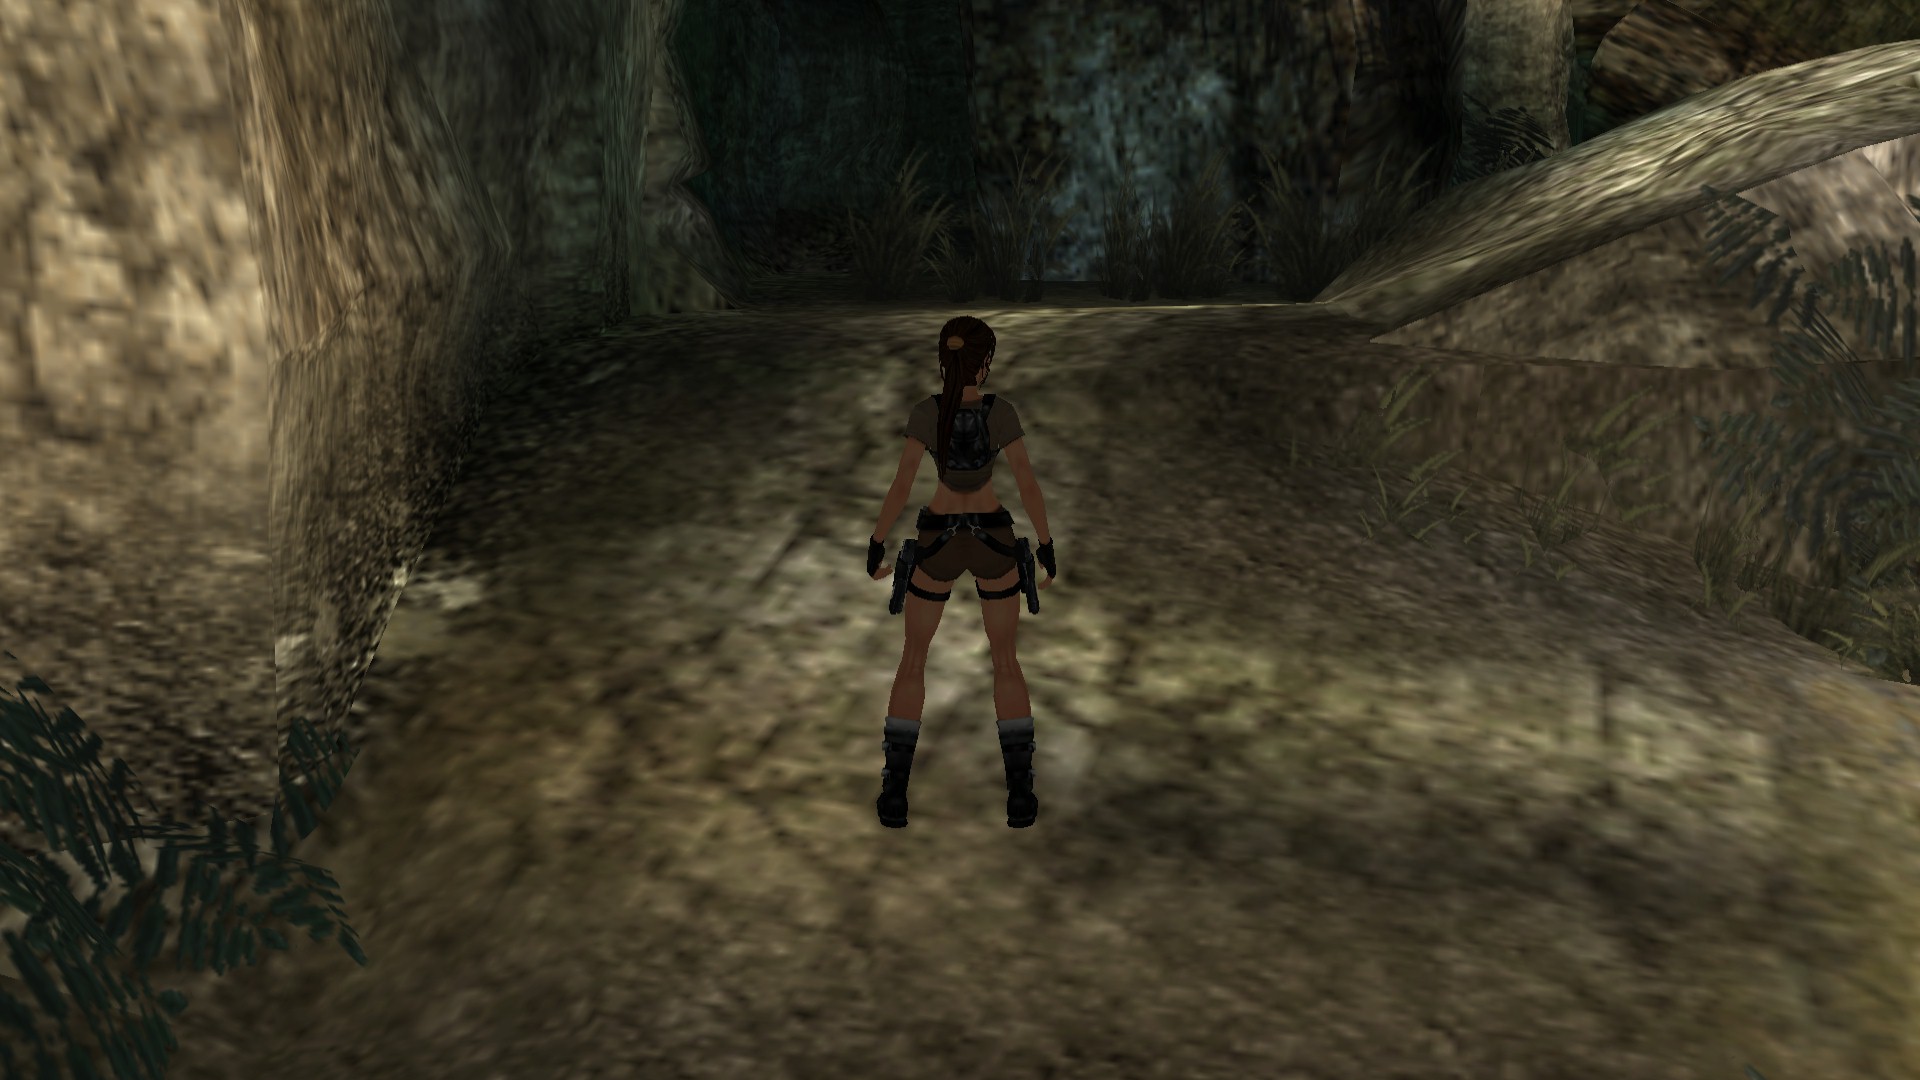 Amazoncom: Tomb Raider: Legend: PC: Video Games